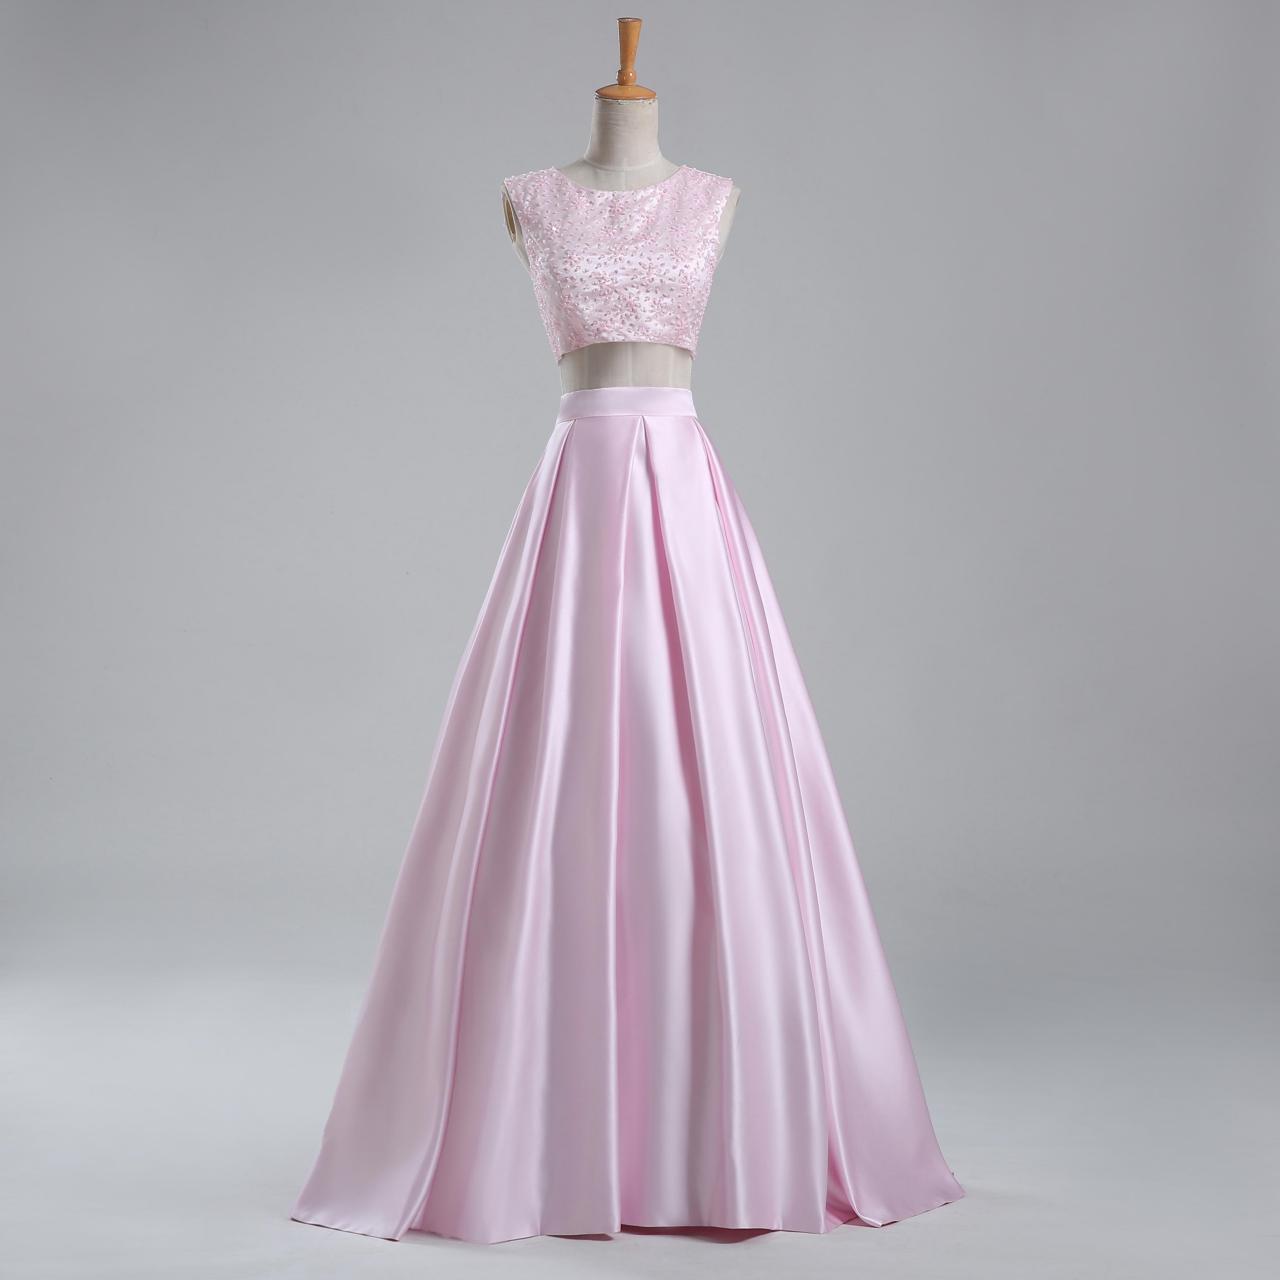 Pink Beaded Prom Dress, 2 Piece Prom Dresses, Satin Prom Dress, Elegant Prom Dress, Prom Dress, 2016 Prom Dresses, Simple Prom Dress, Vestido De